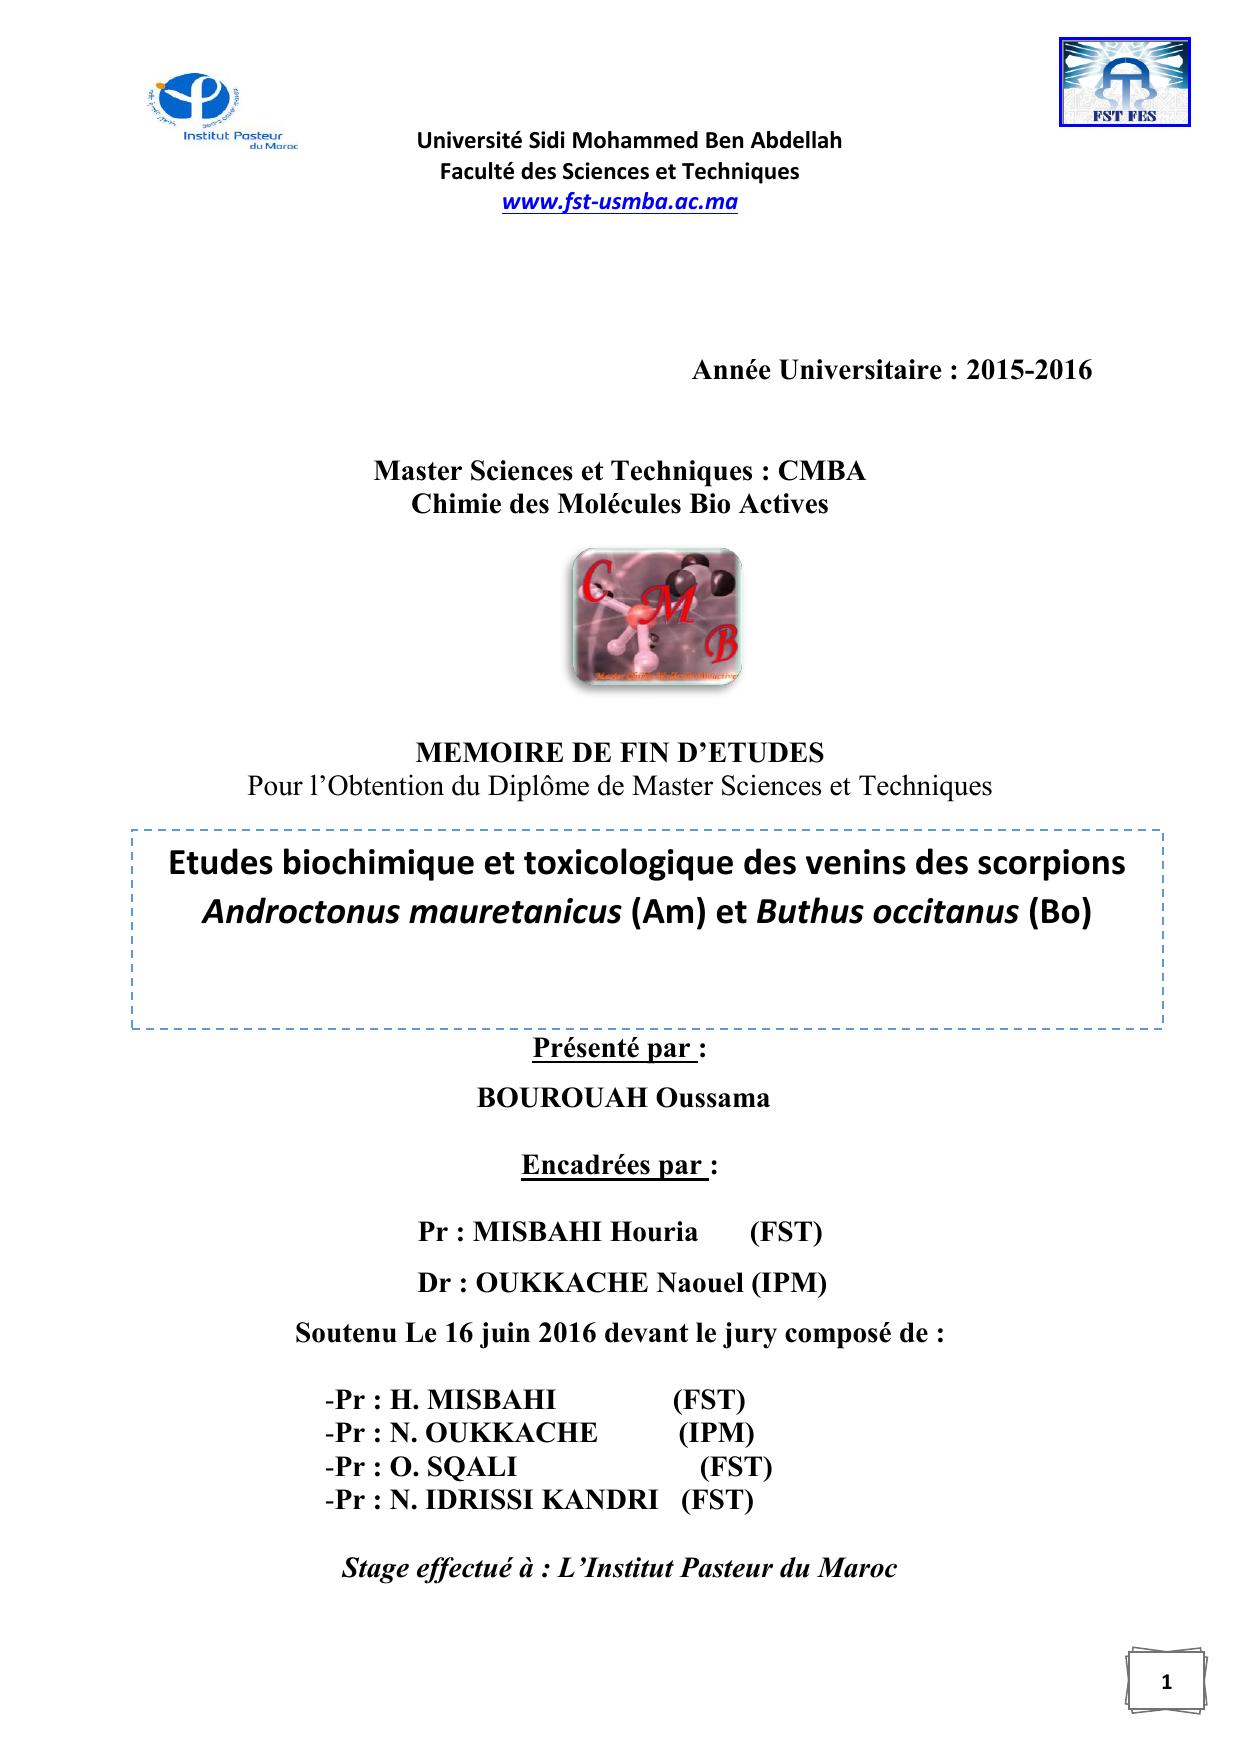 Etudes biochimique et toxicologique des venins des scorpions Androctonus mauretanicus (Am) et Buthus occitanus (Bo)